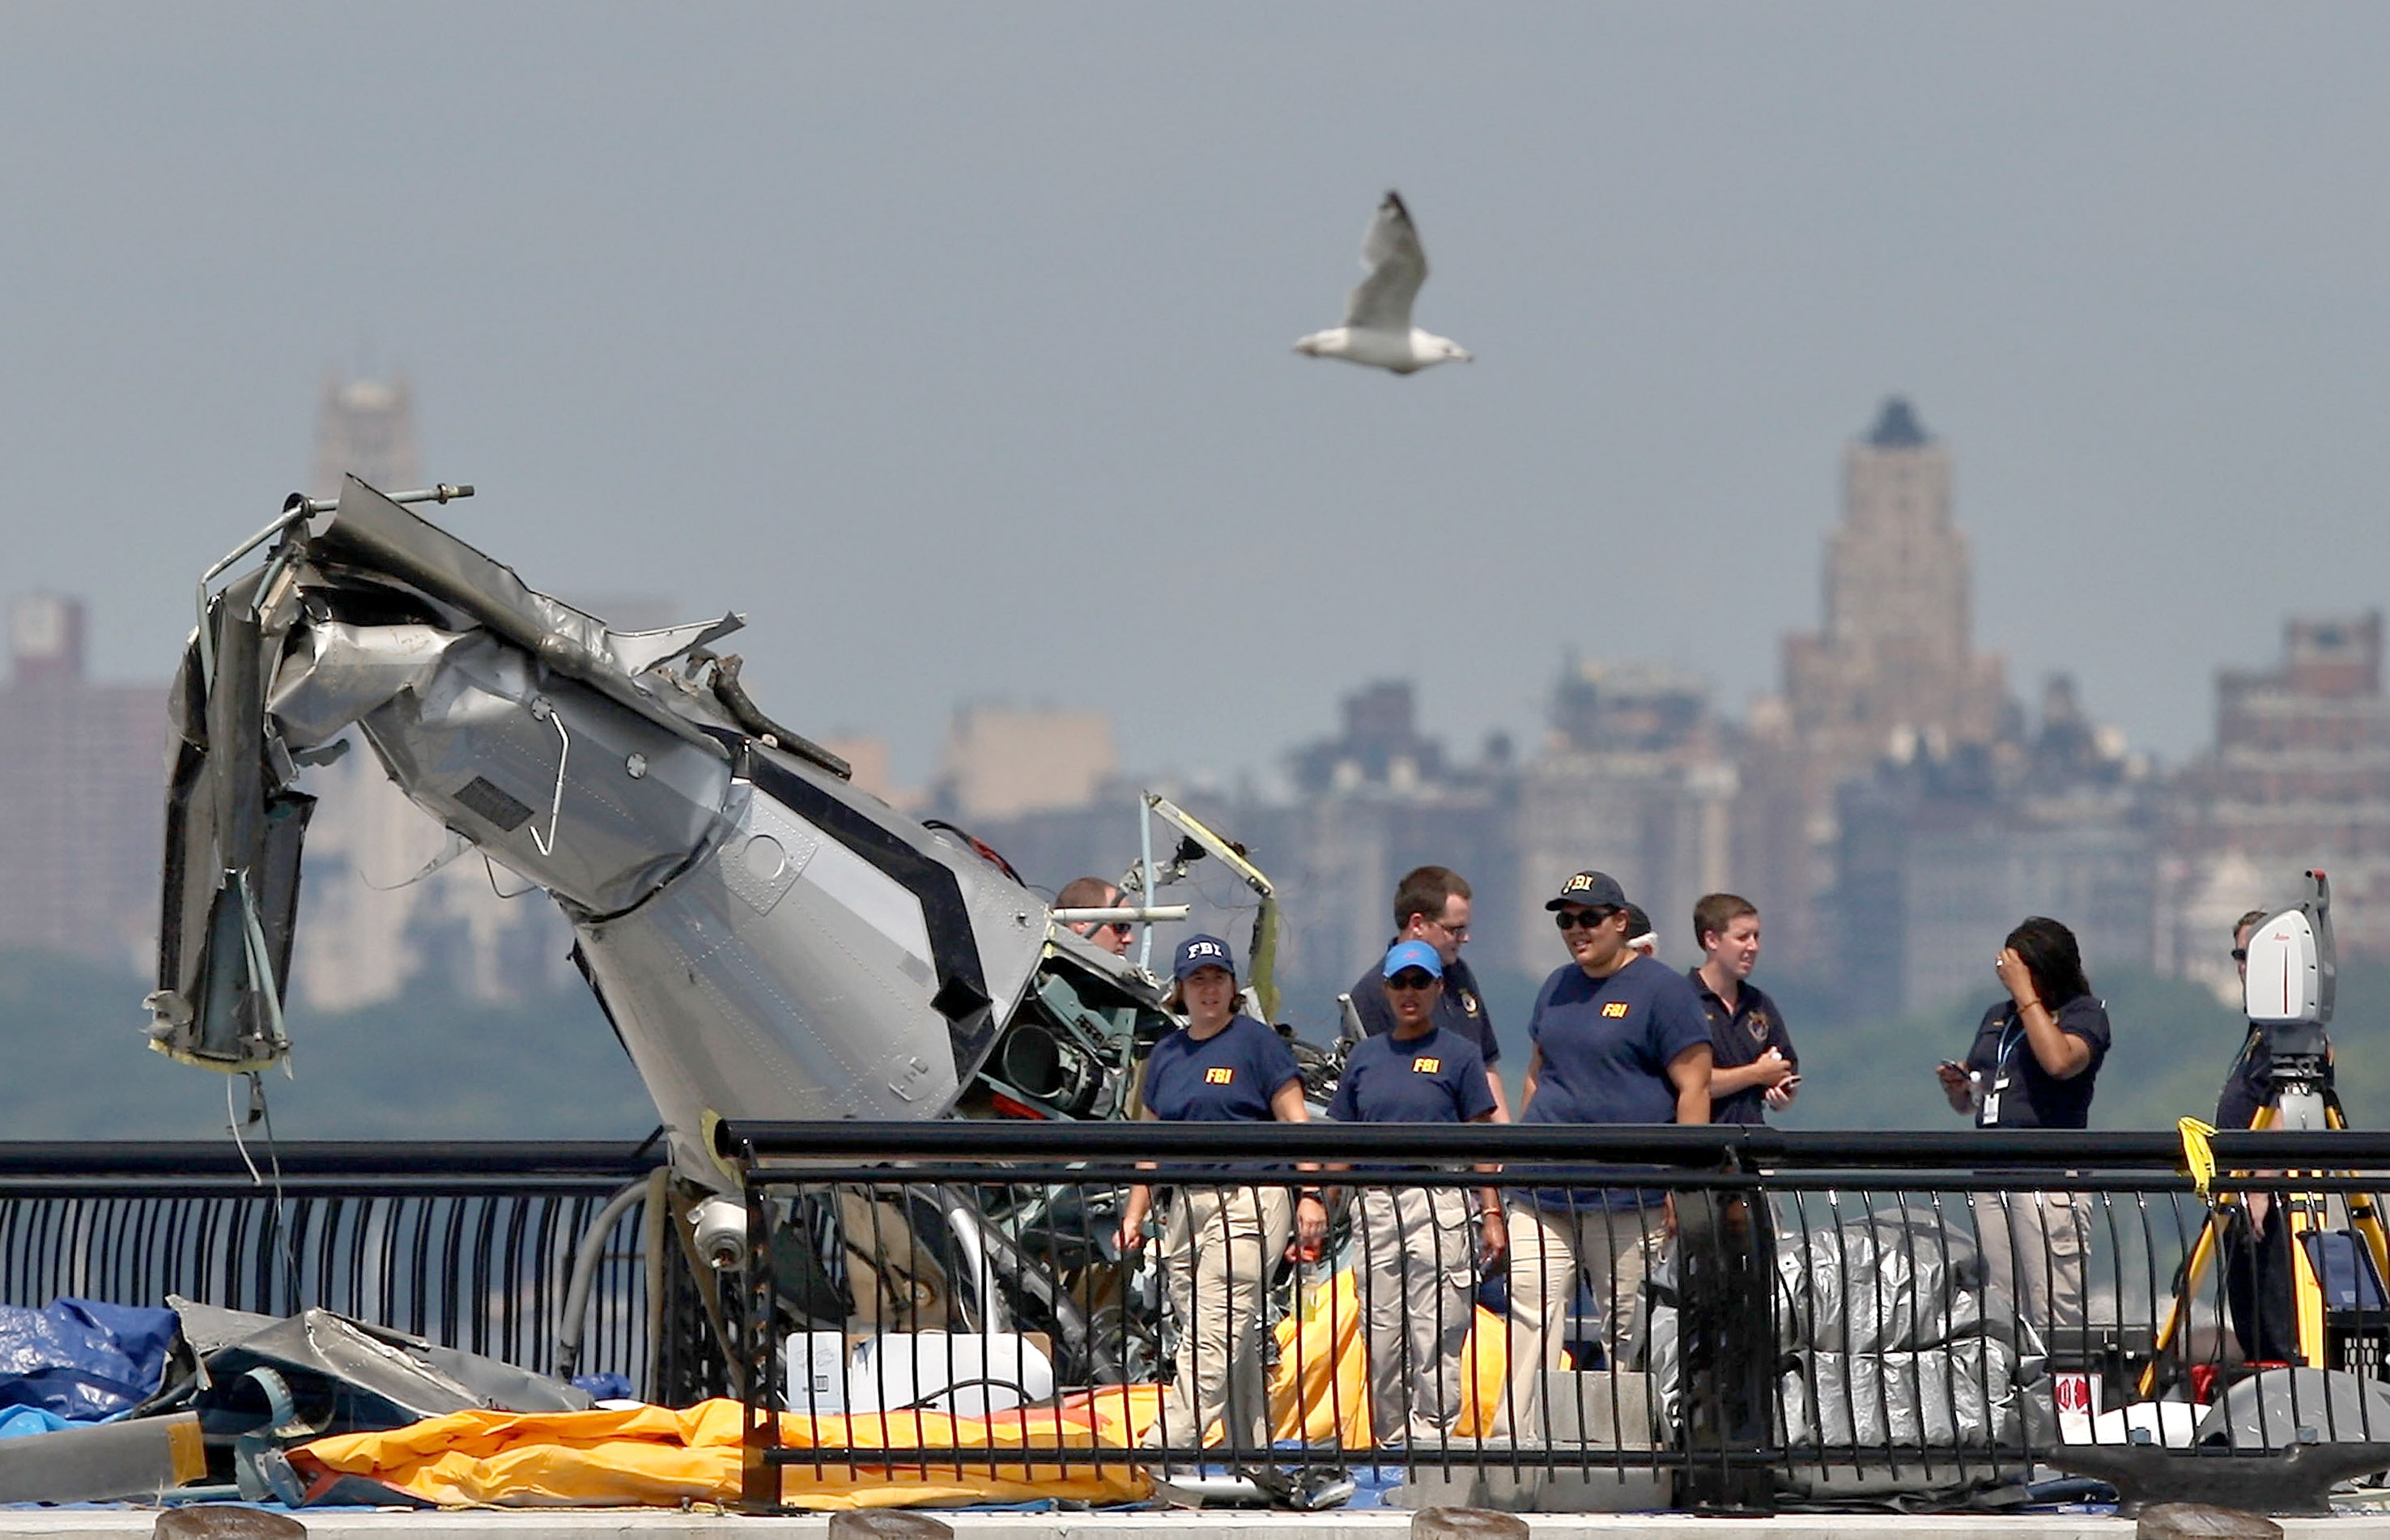 Helicopter, plane collide midair, crash into Hudson River in Hoboken 